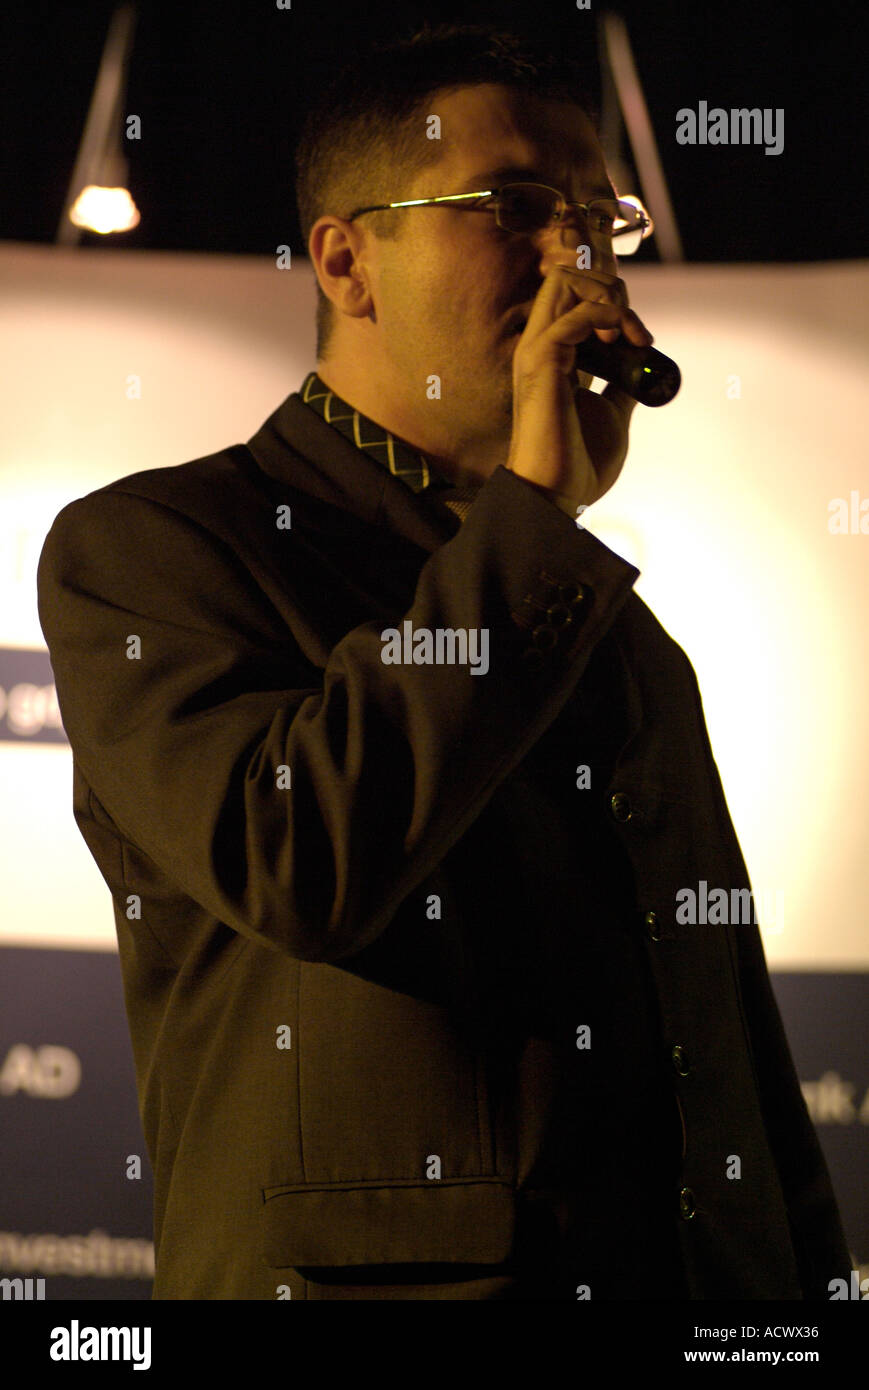 Singer Male Singing Stock Photo